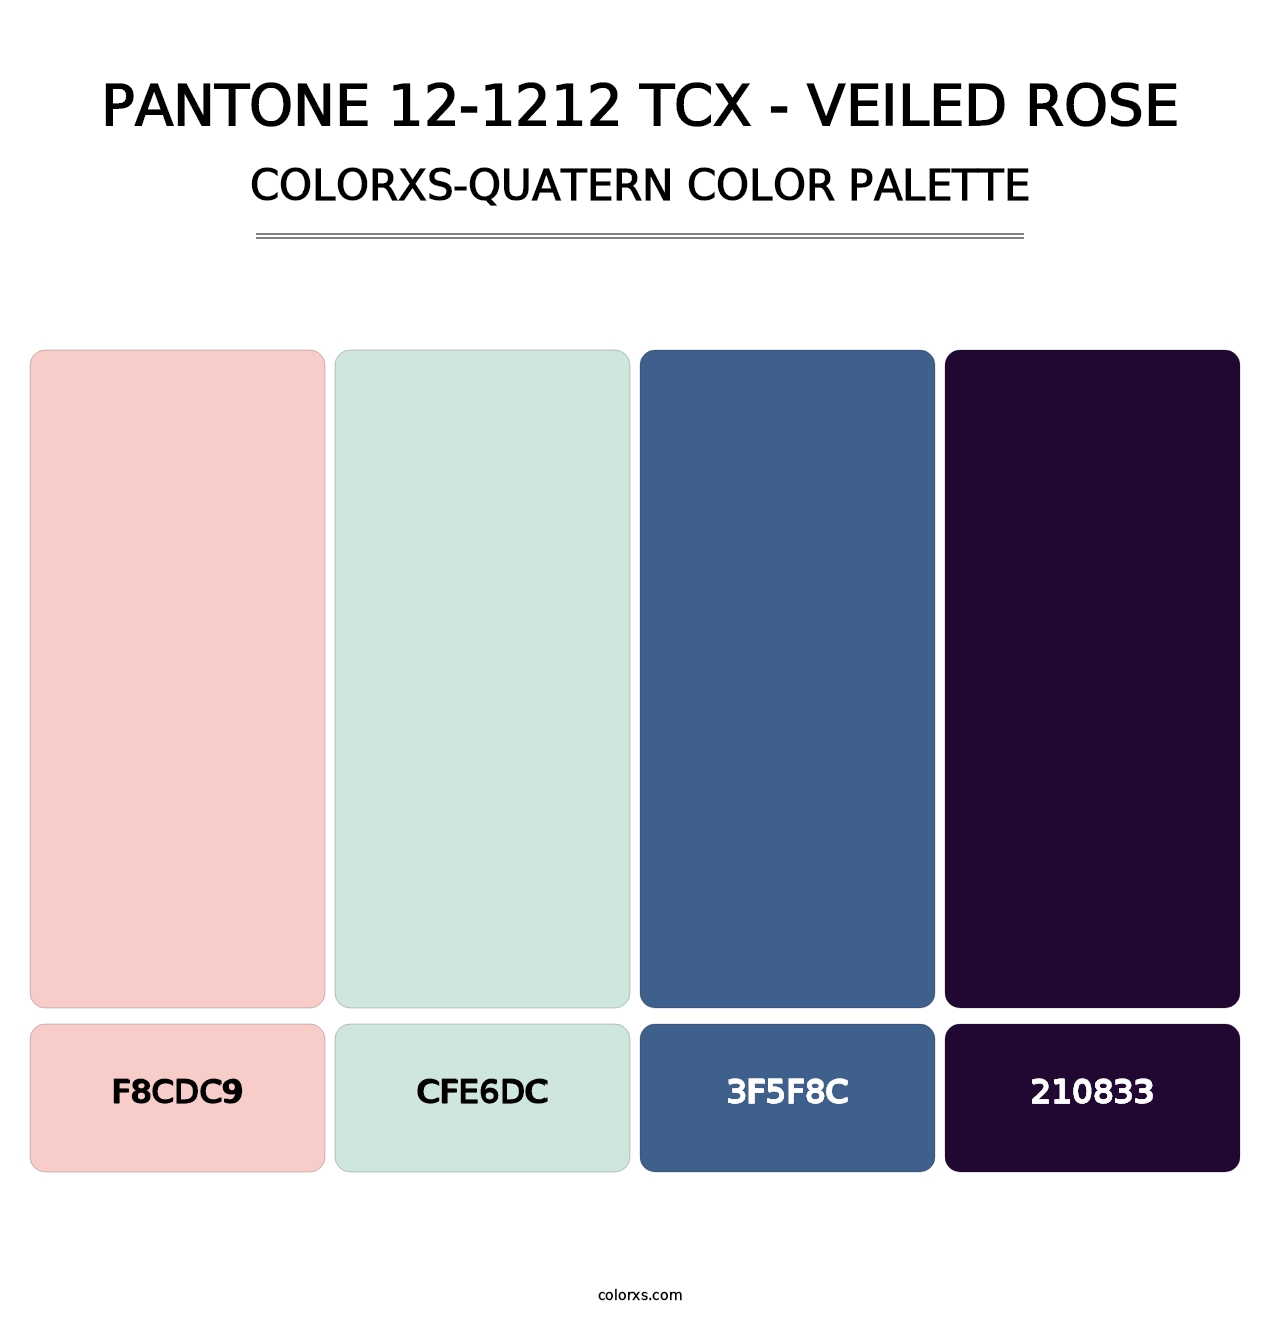 PANTONE 12-1212 TCX - Veiled Rose - Colorxs Quatern Palette